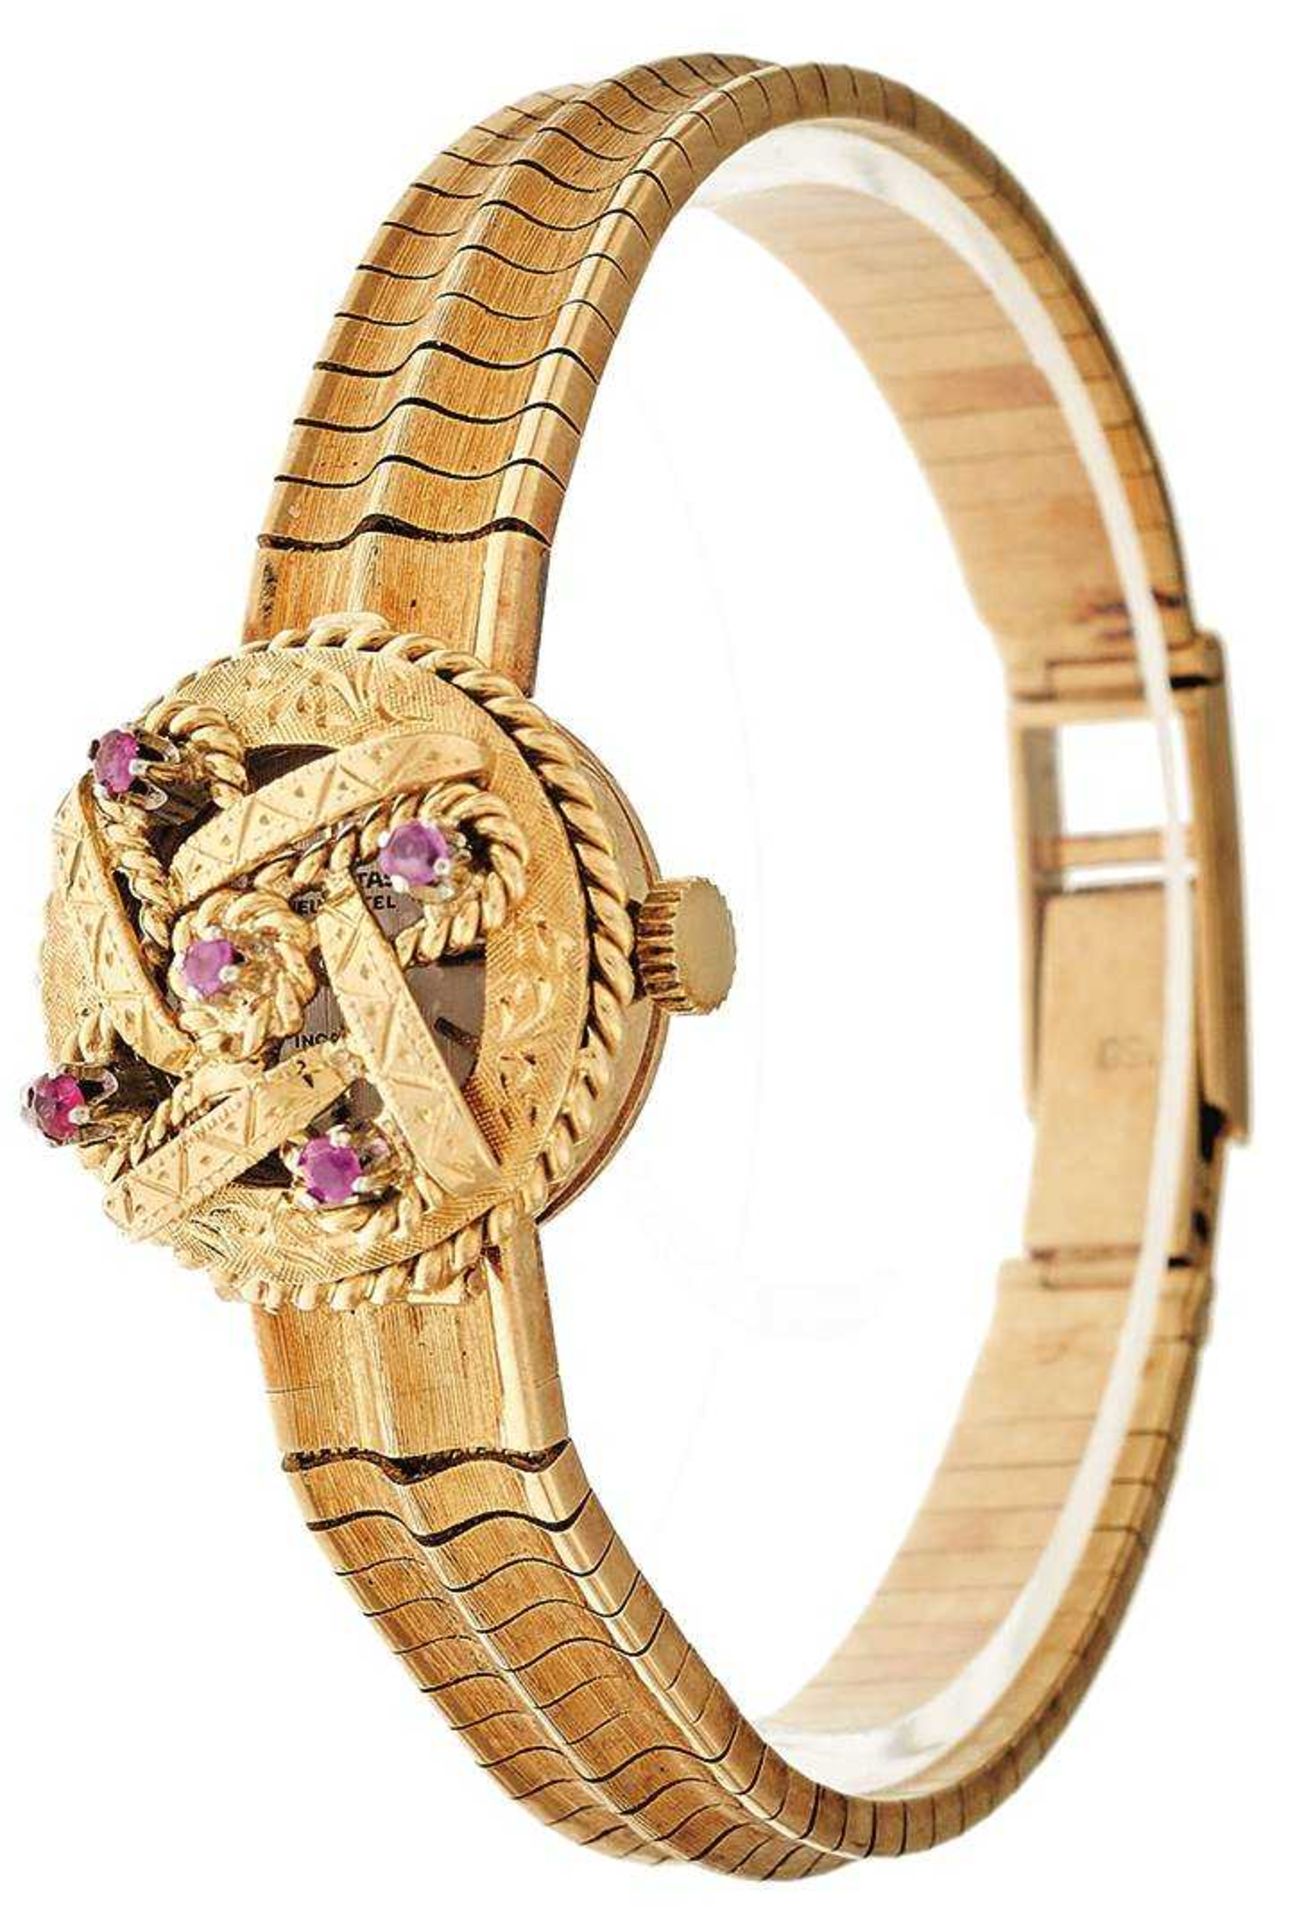 Felicitas Neuchatel Damen Armbanduhr. Ca. 20mm, Formuhr, 750er Gelbgold, Handaufzug. Silberfarbenes